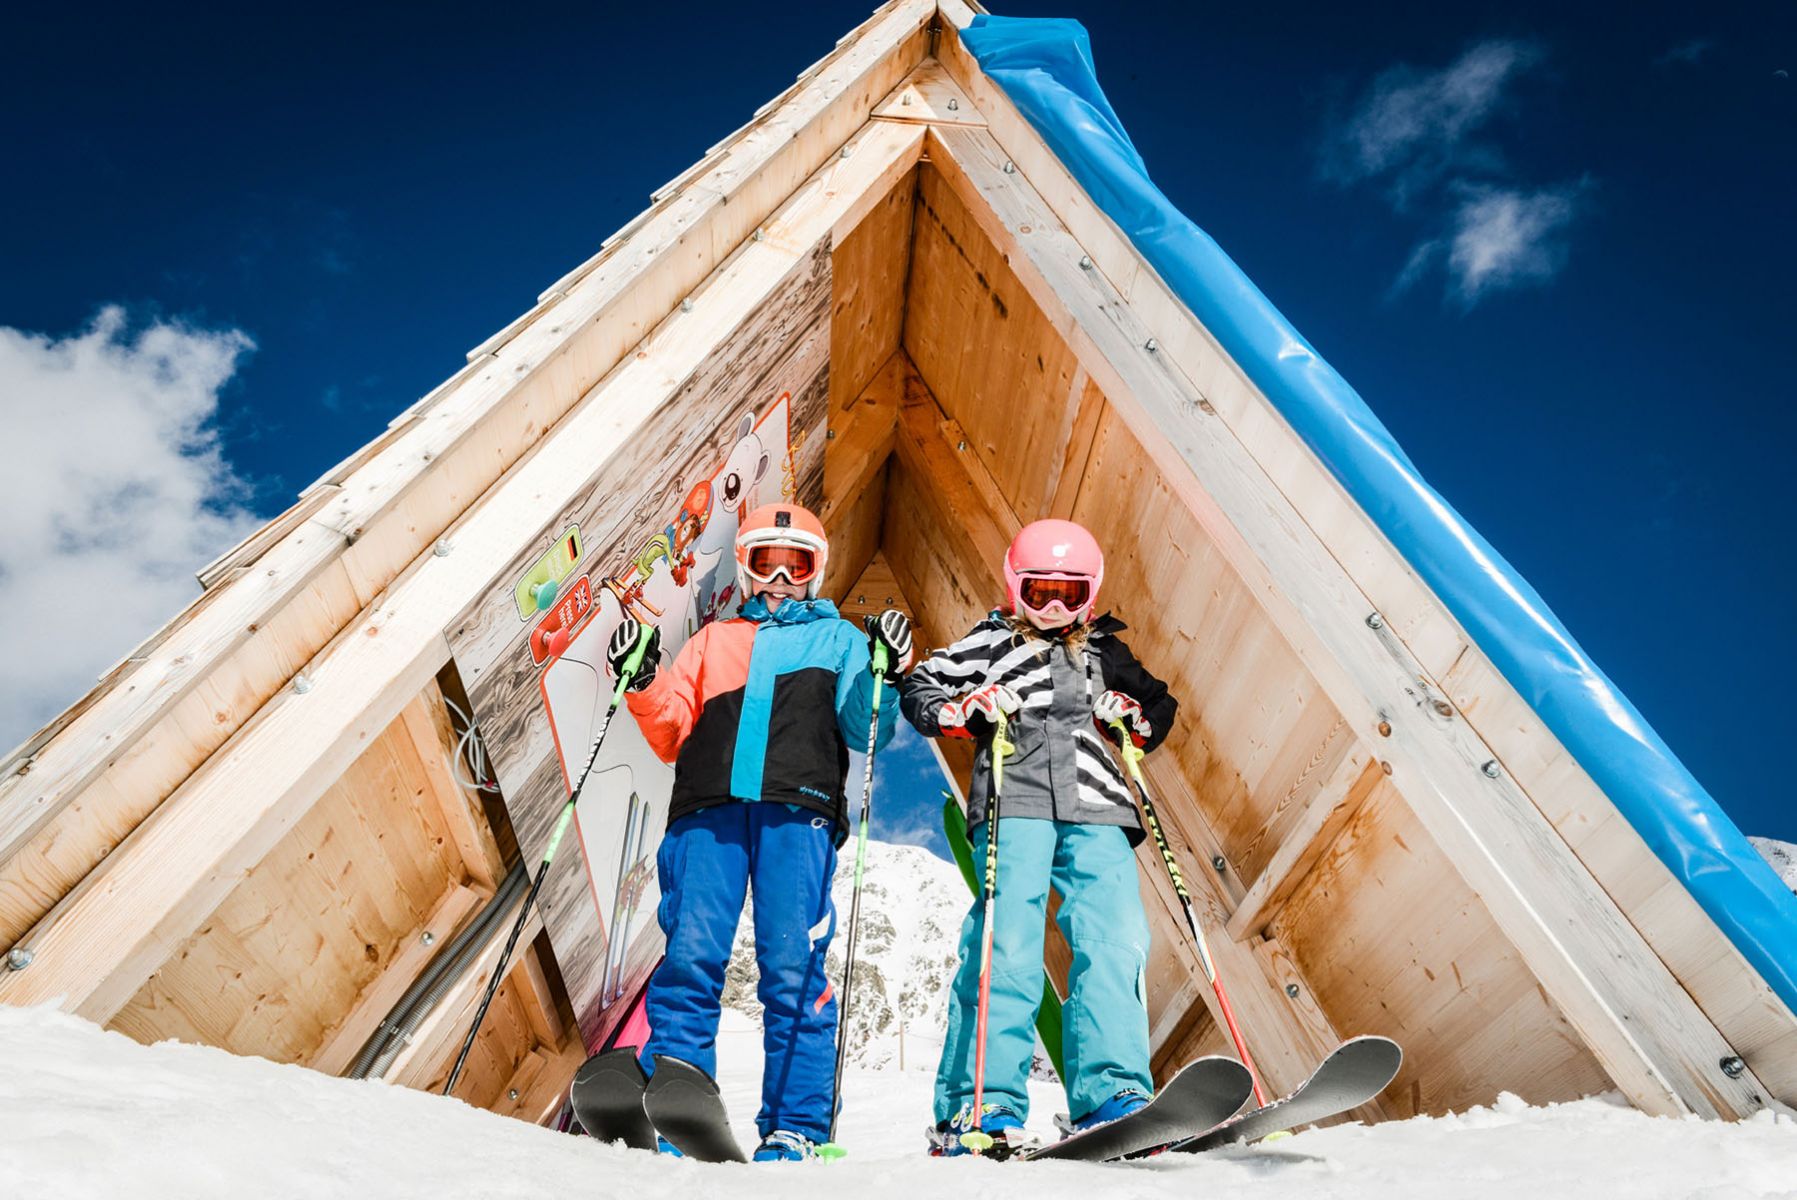 Children's ski courses in Obertauern